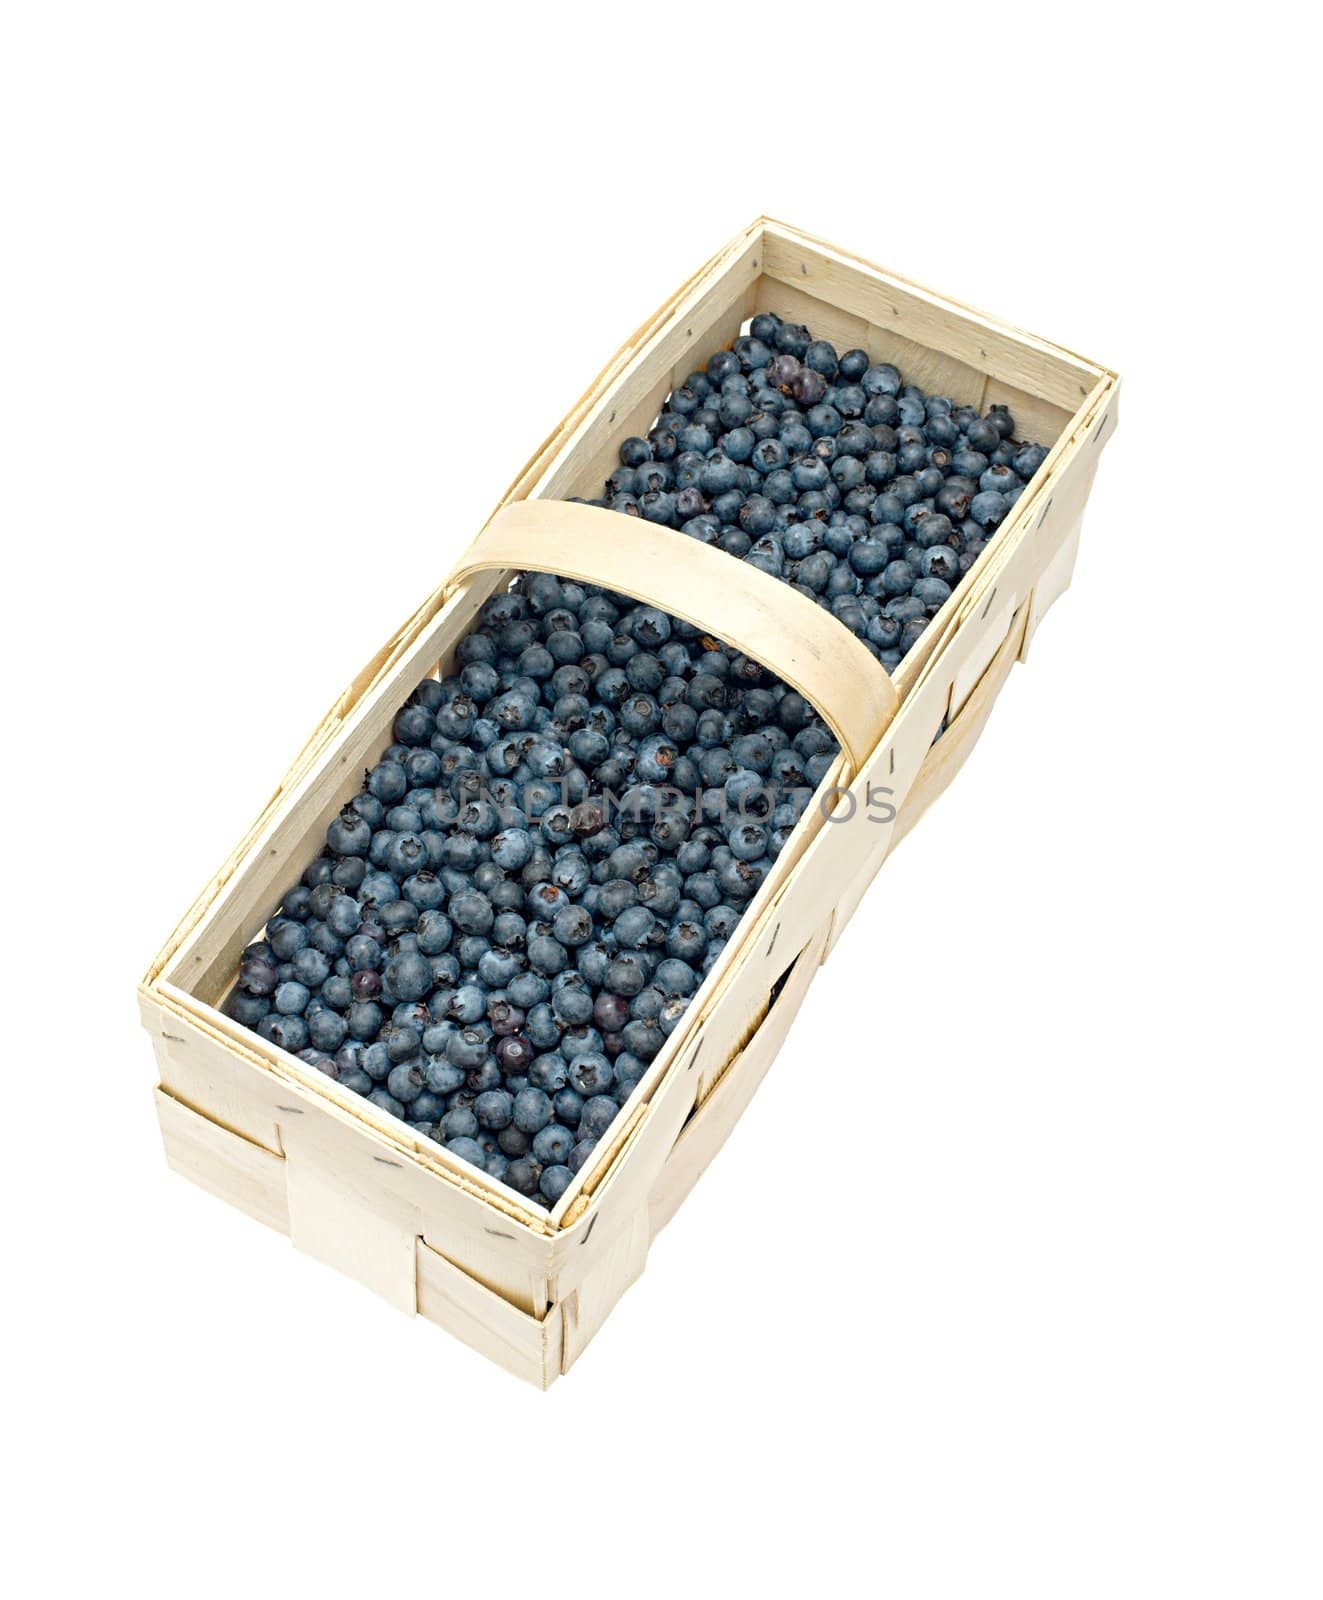 Blueberries by Gudella